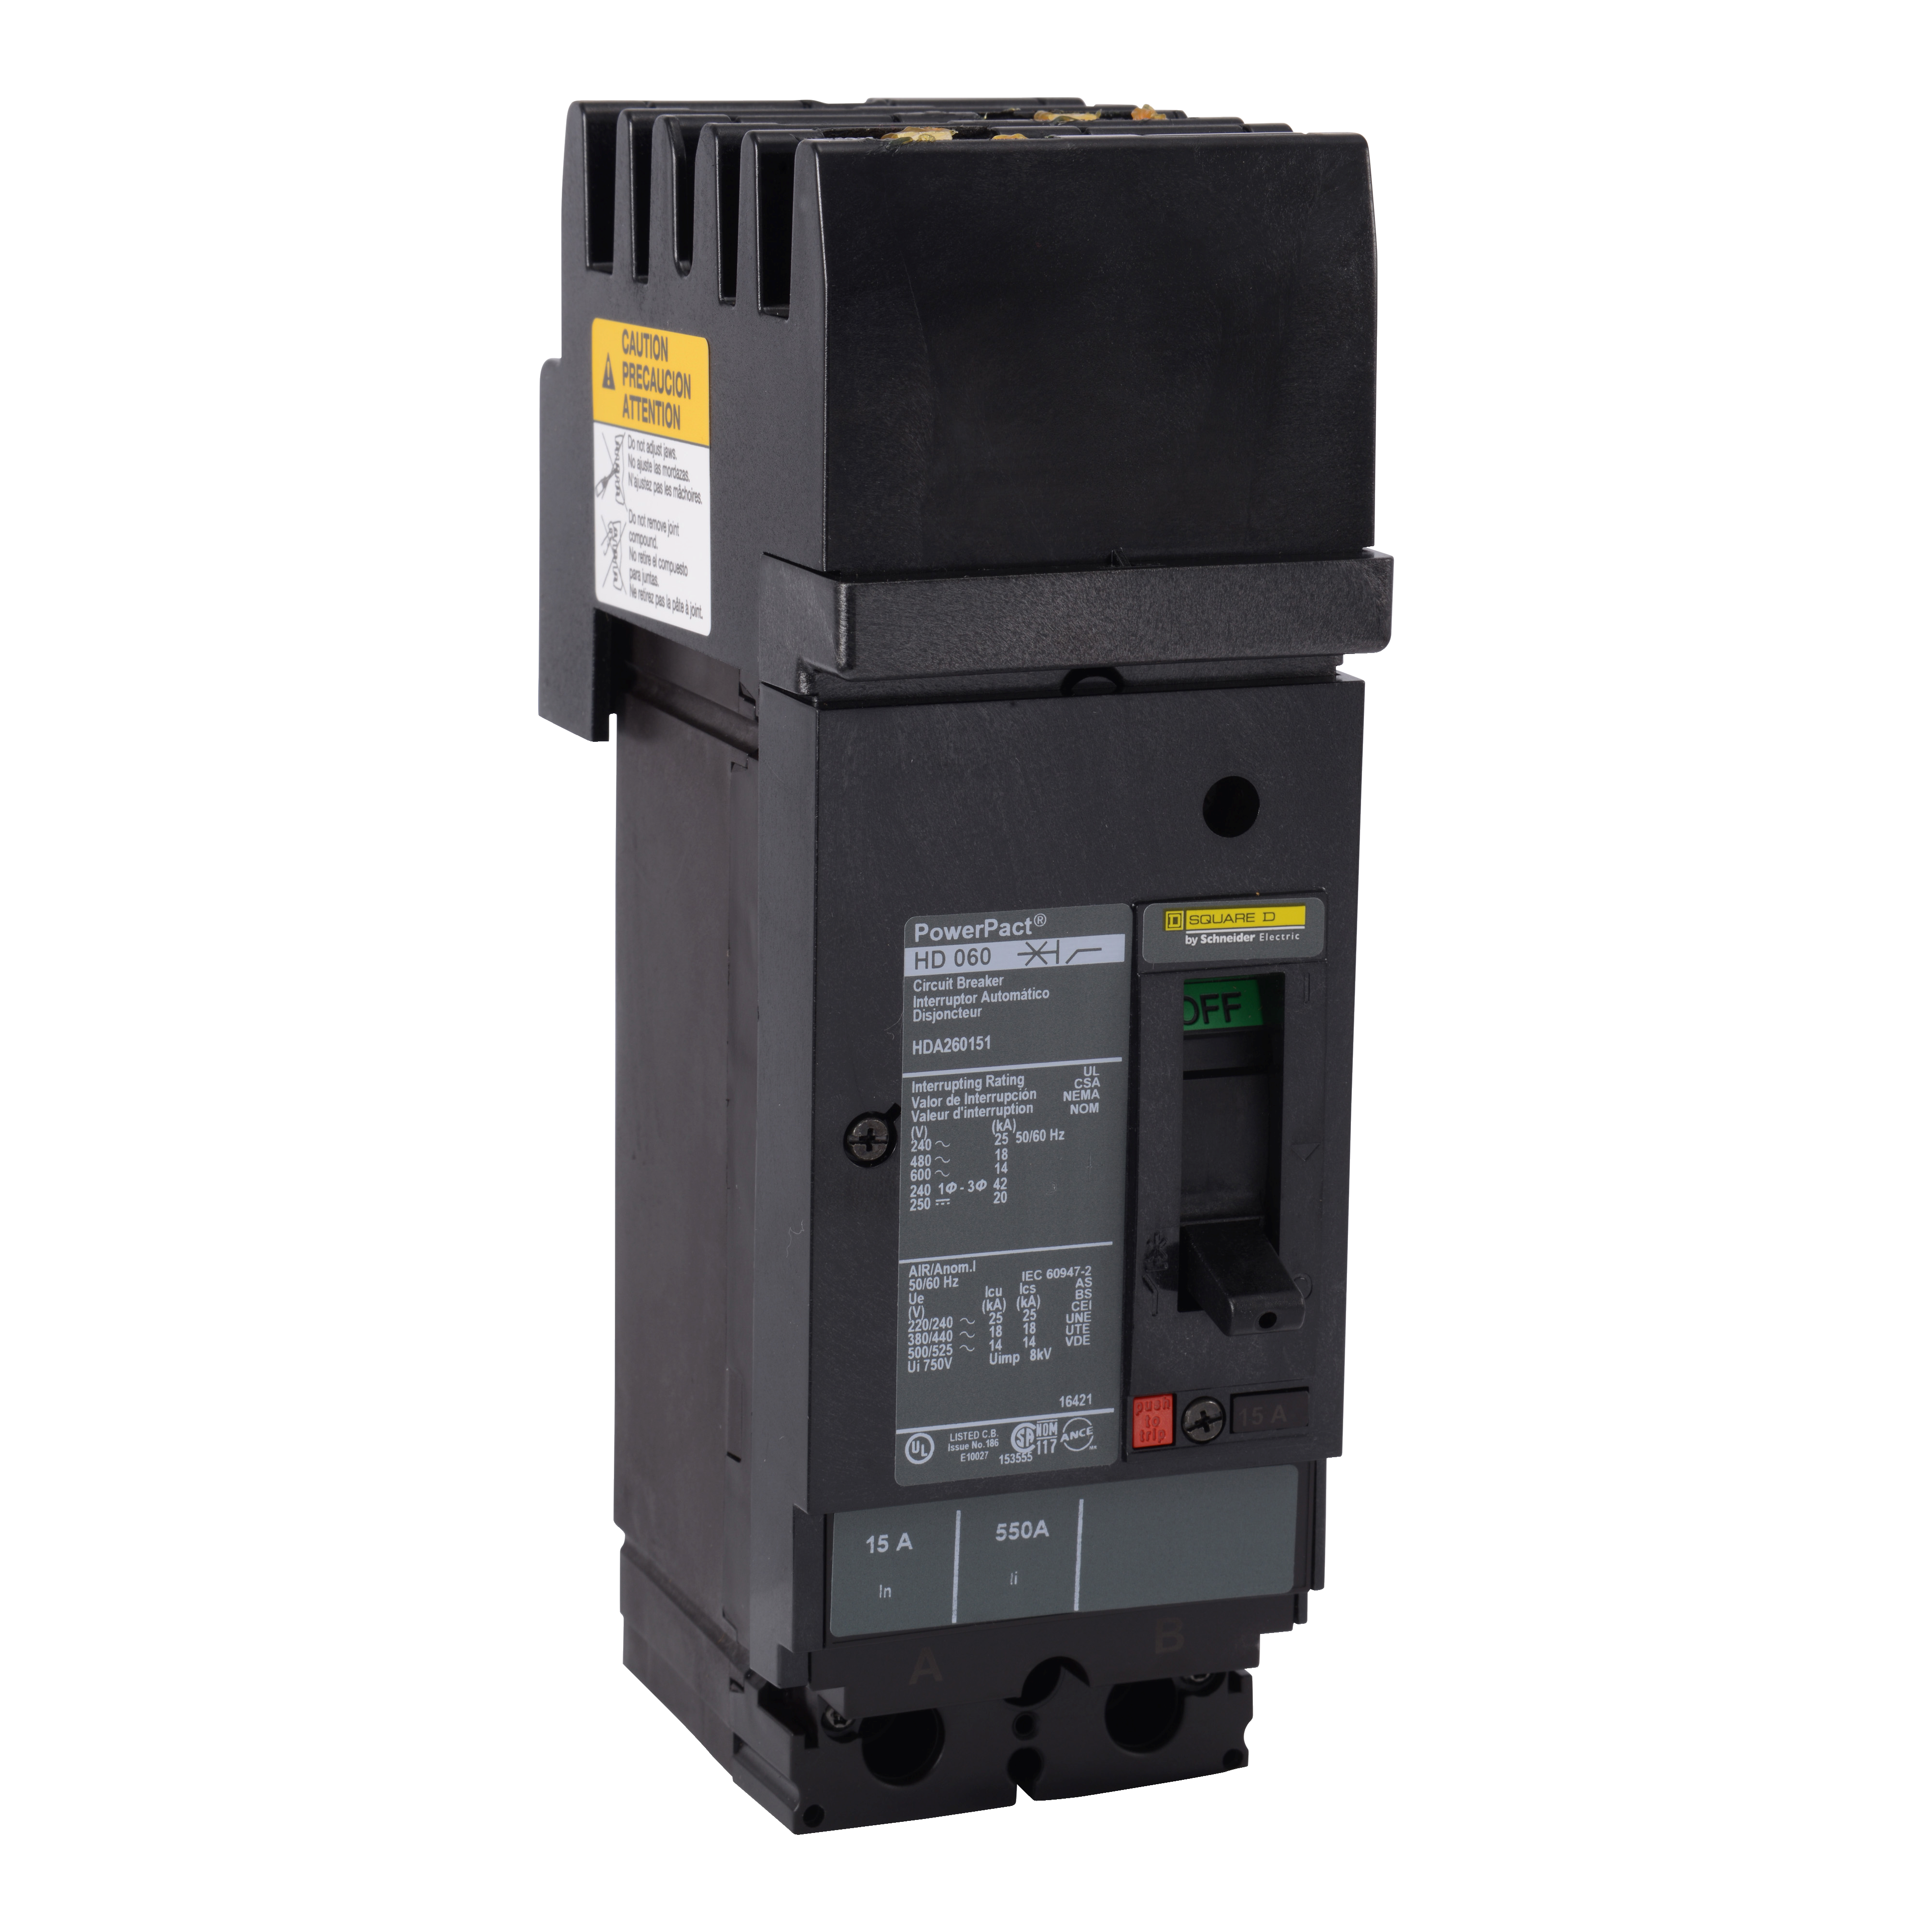 Circuit breaker, PowerPacT H, 70A, 2 pole, 600VAC, 14kA, I-Line, thermal magnetic, 80%, CA